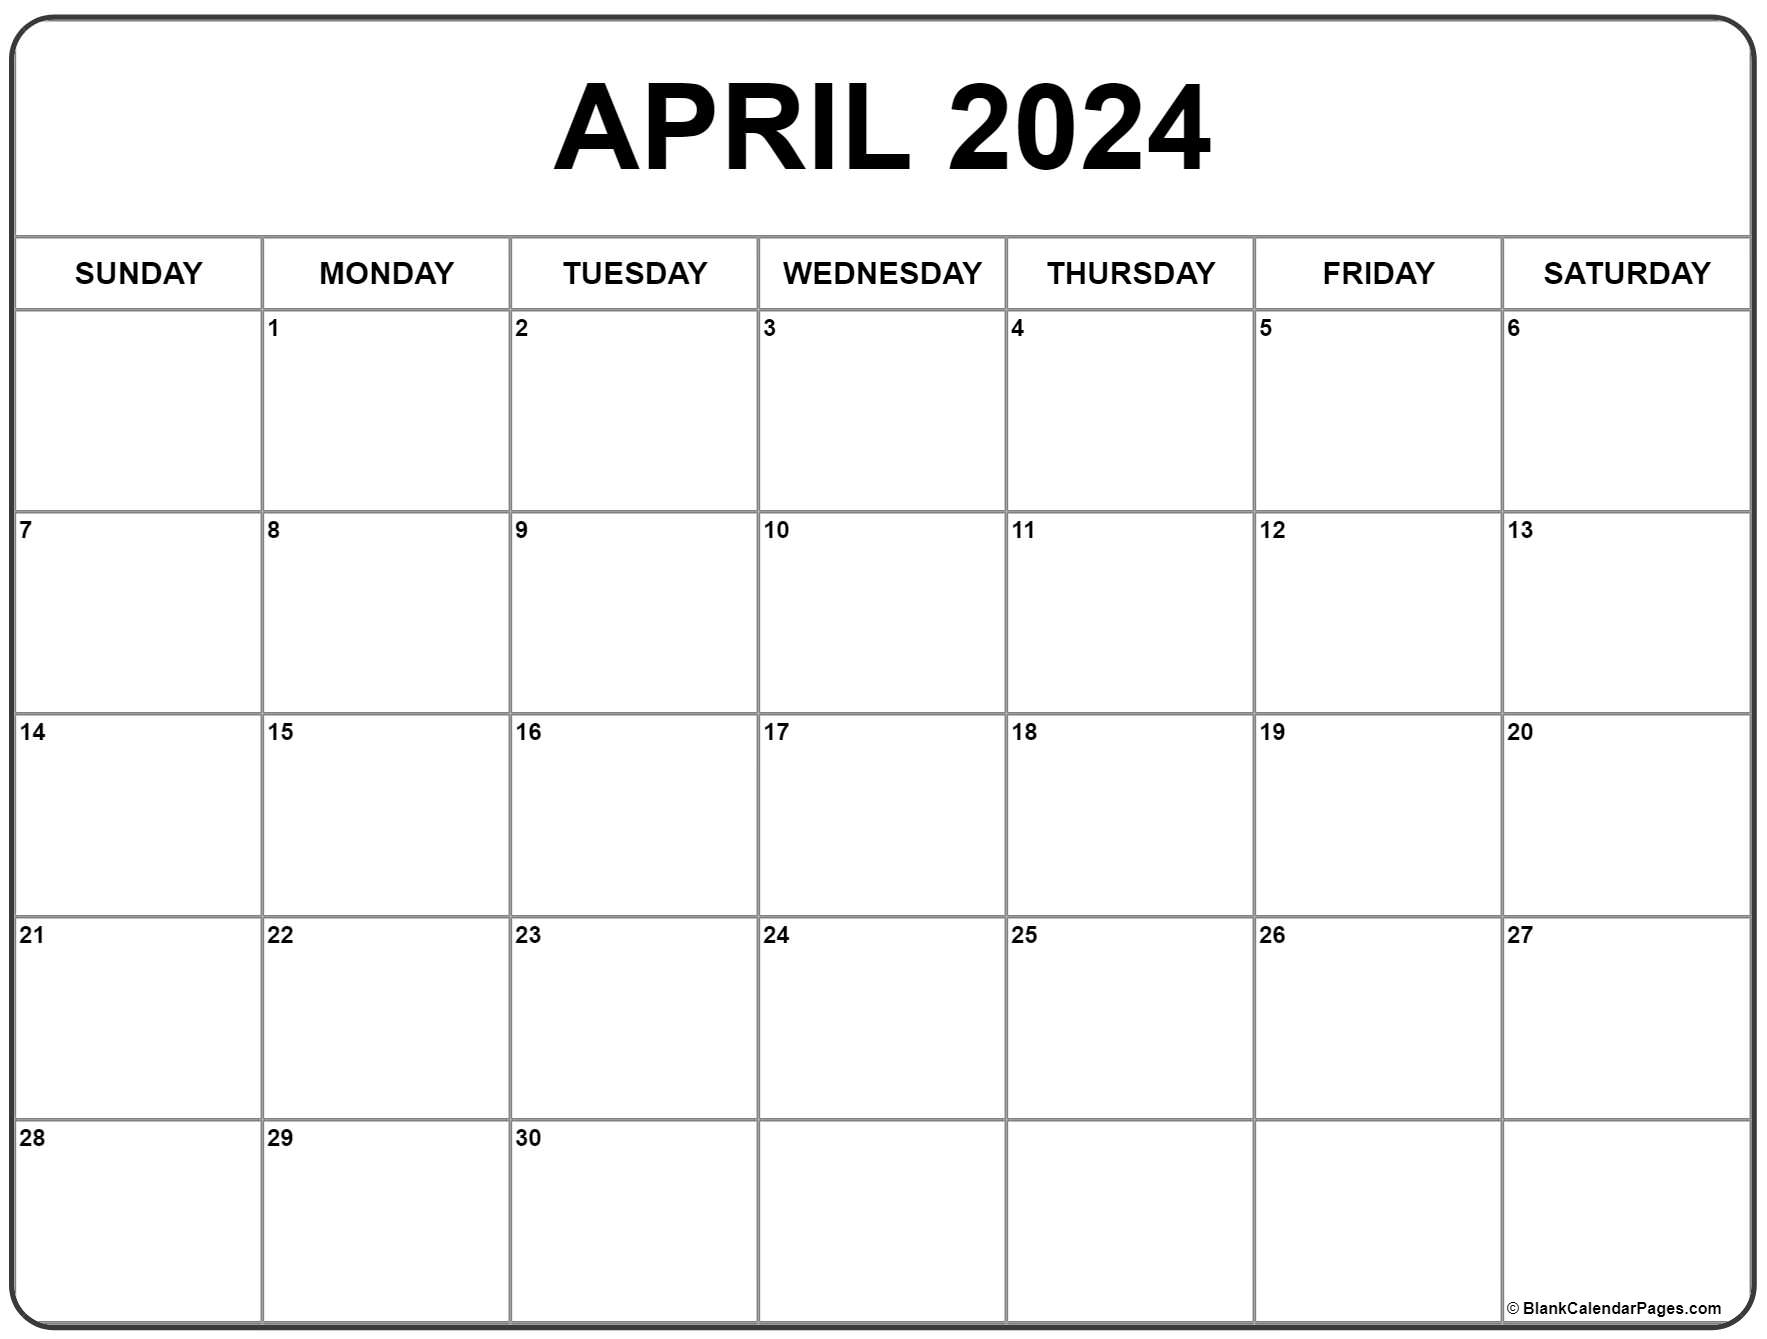 April 2024 Calendar | Free Printable Calendar regarding Free Printable April 2024 Monthly Calendar